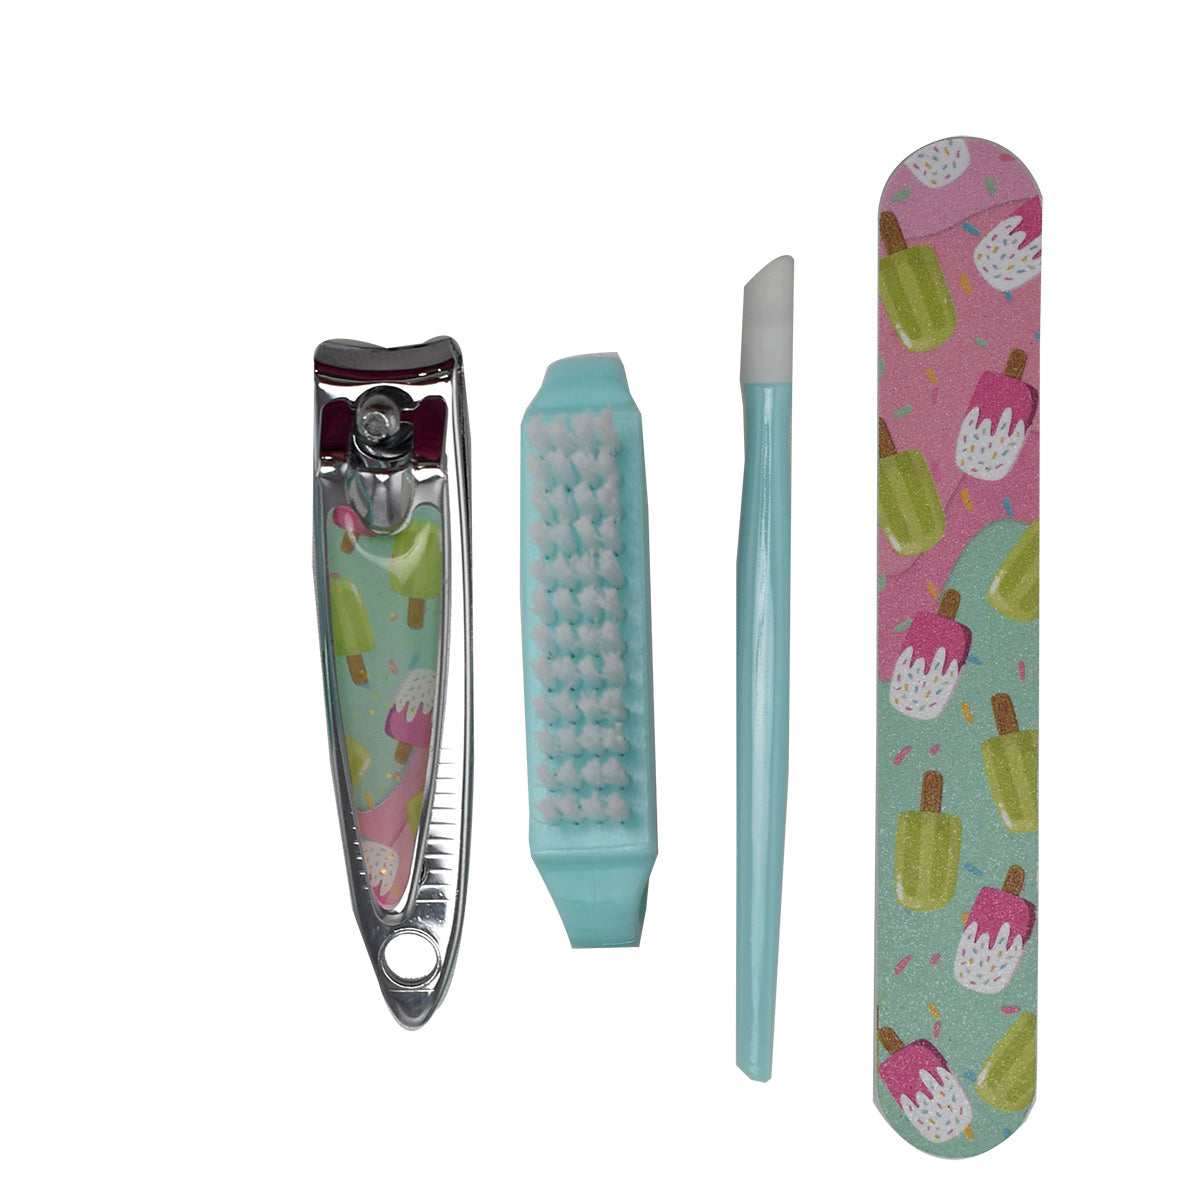 Kit de Belleza Para Manicure, Easy Beauty Cepillo, Lima, Removedor de Cutícula, Alicate